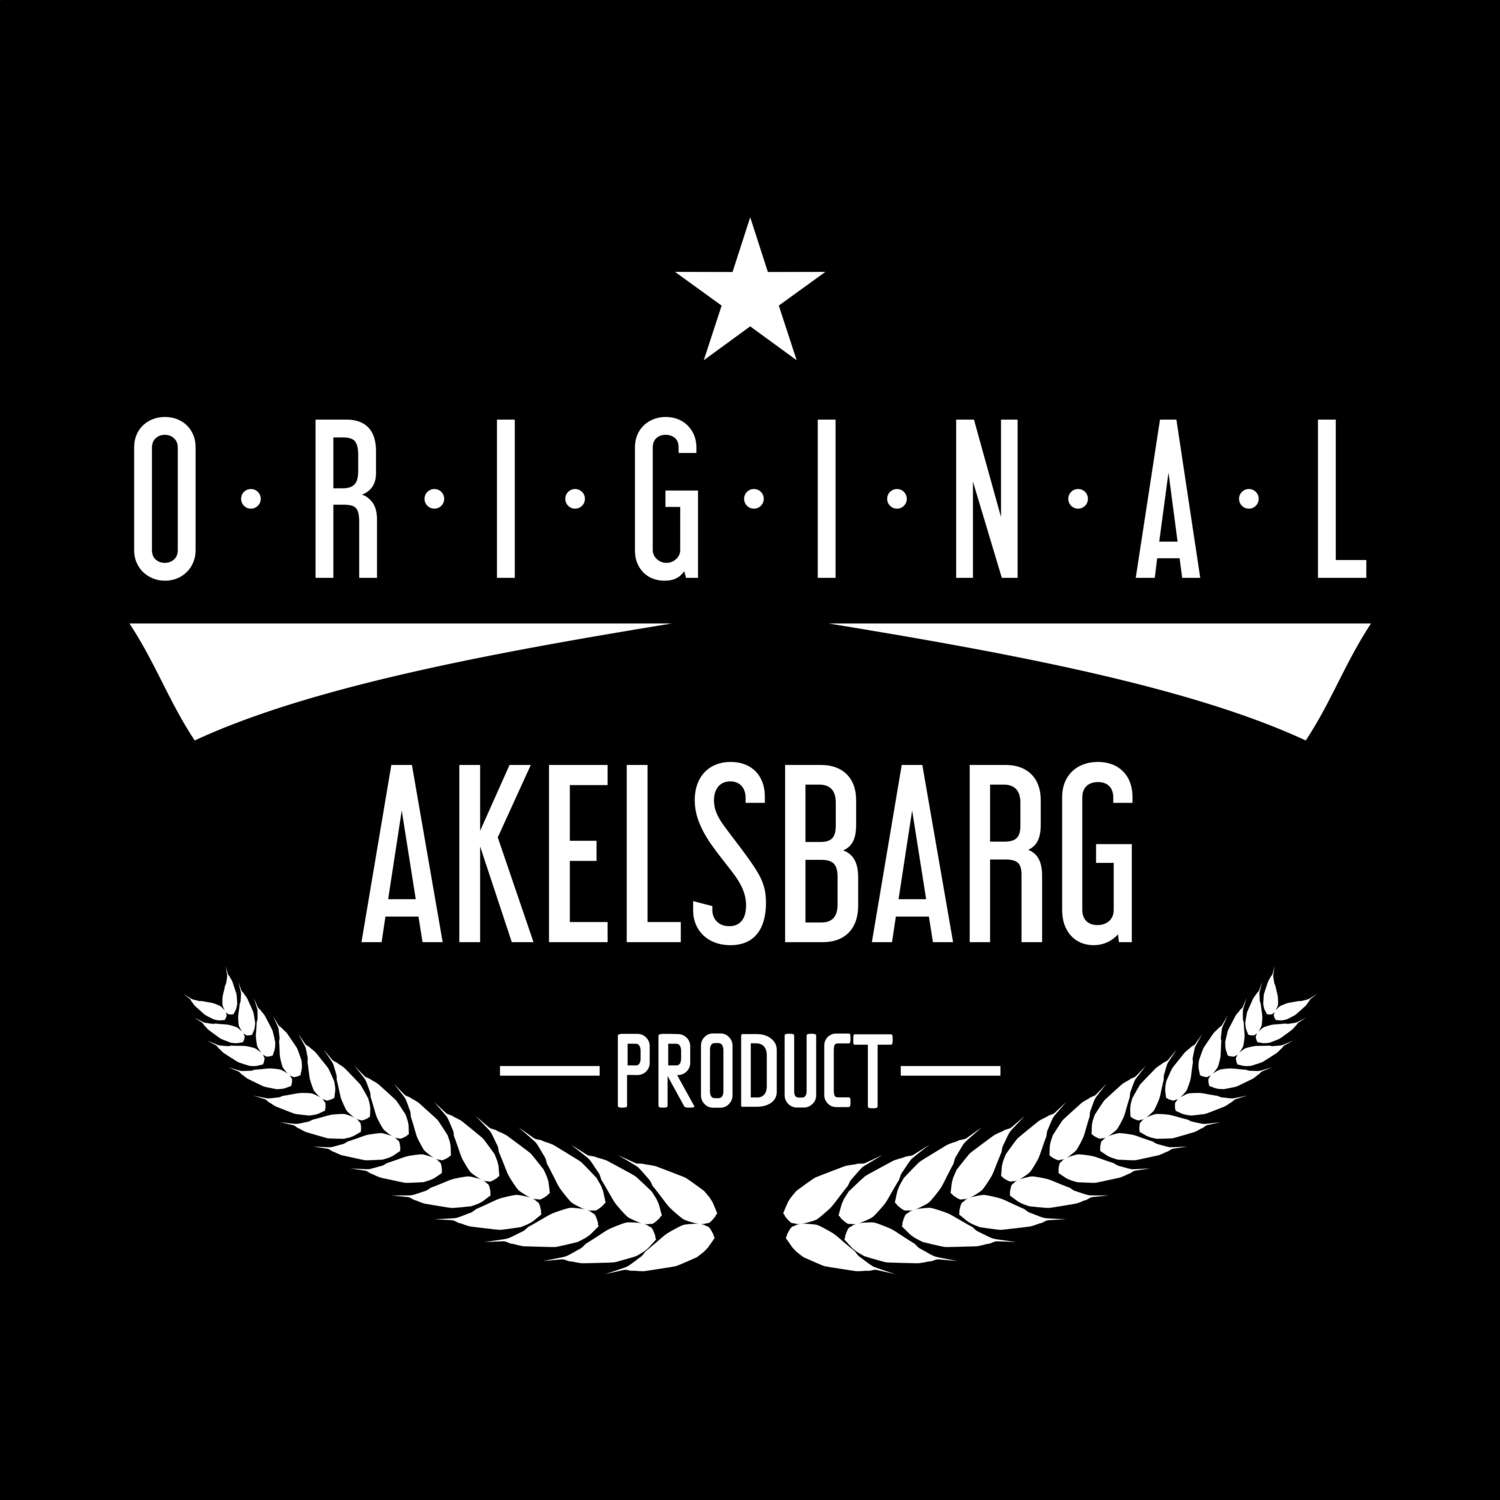 Akelsbarg T-Shirt »Original Product«